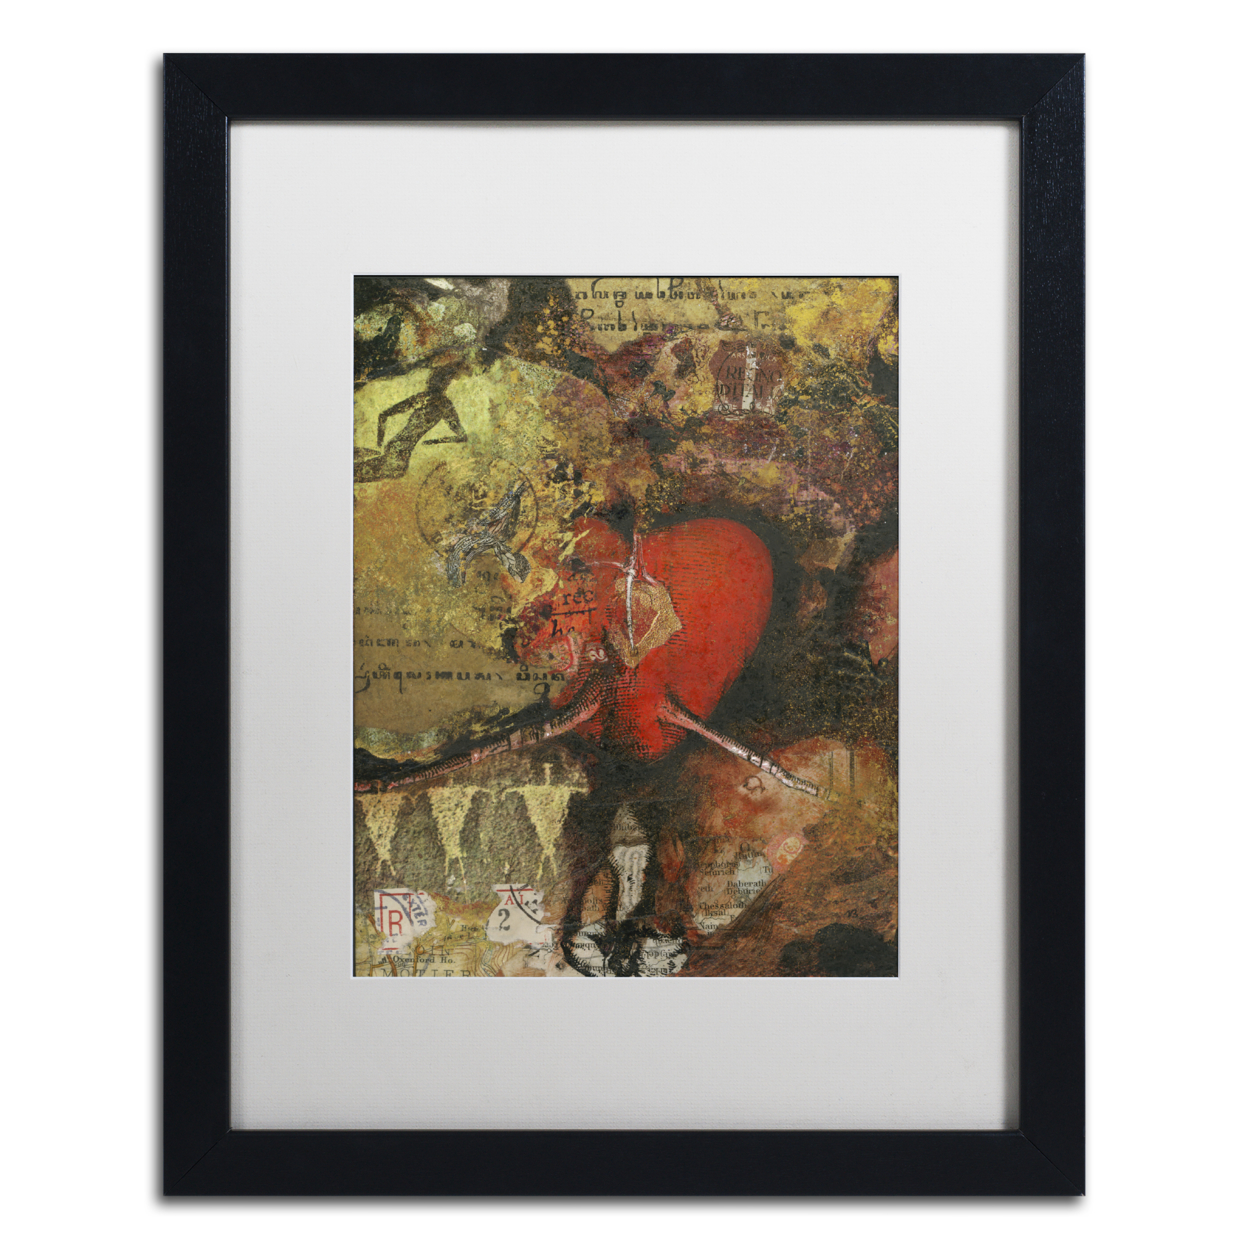 Nick Bantock 'Heart' Black Wooden Framed Art 18 X 22 Inches